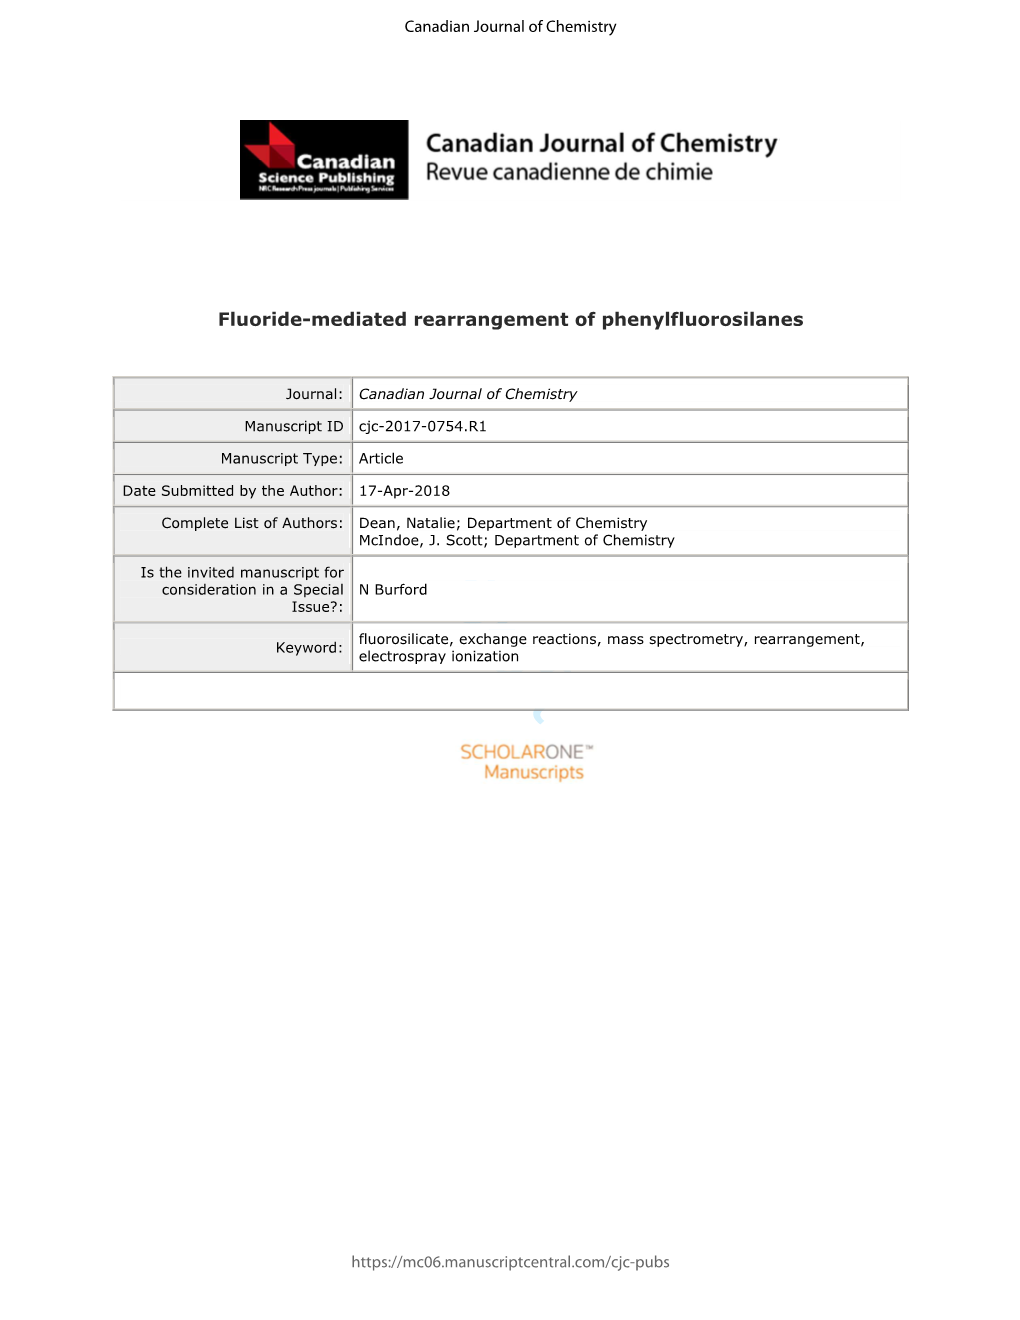 Fluoride-Mediated Rearrangement of Phenylfluorosilanes